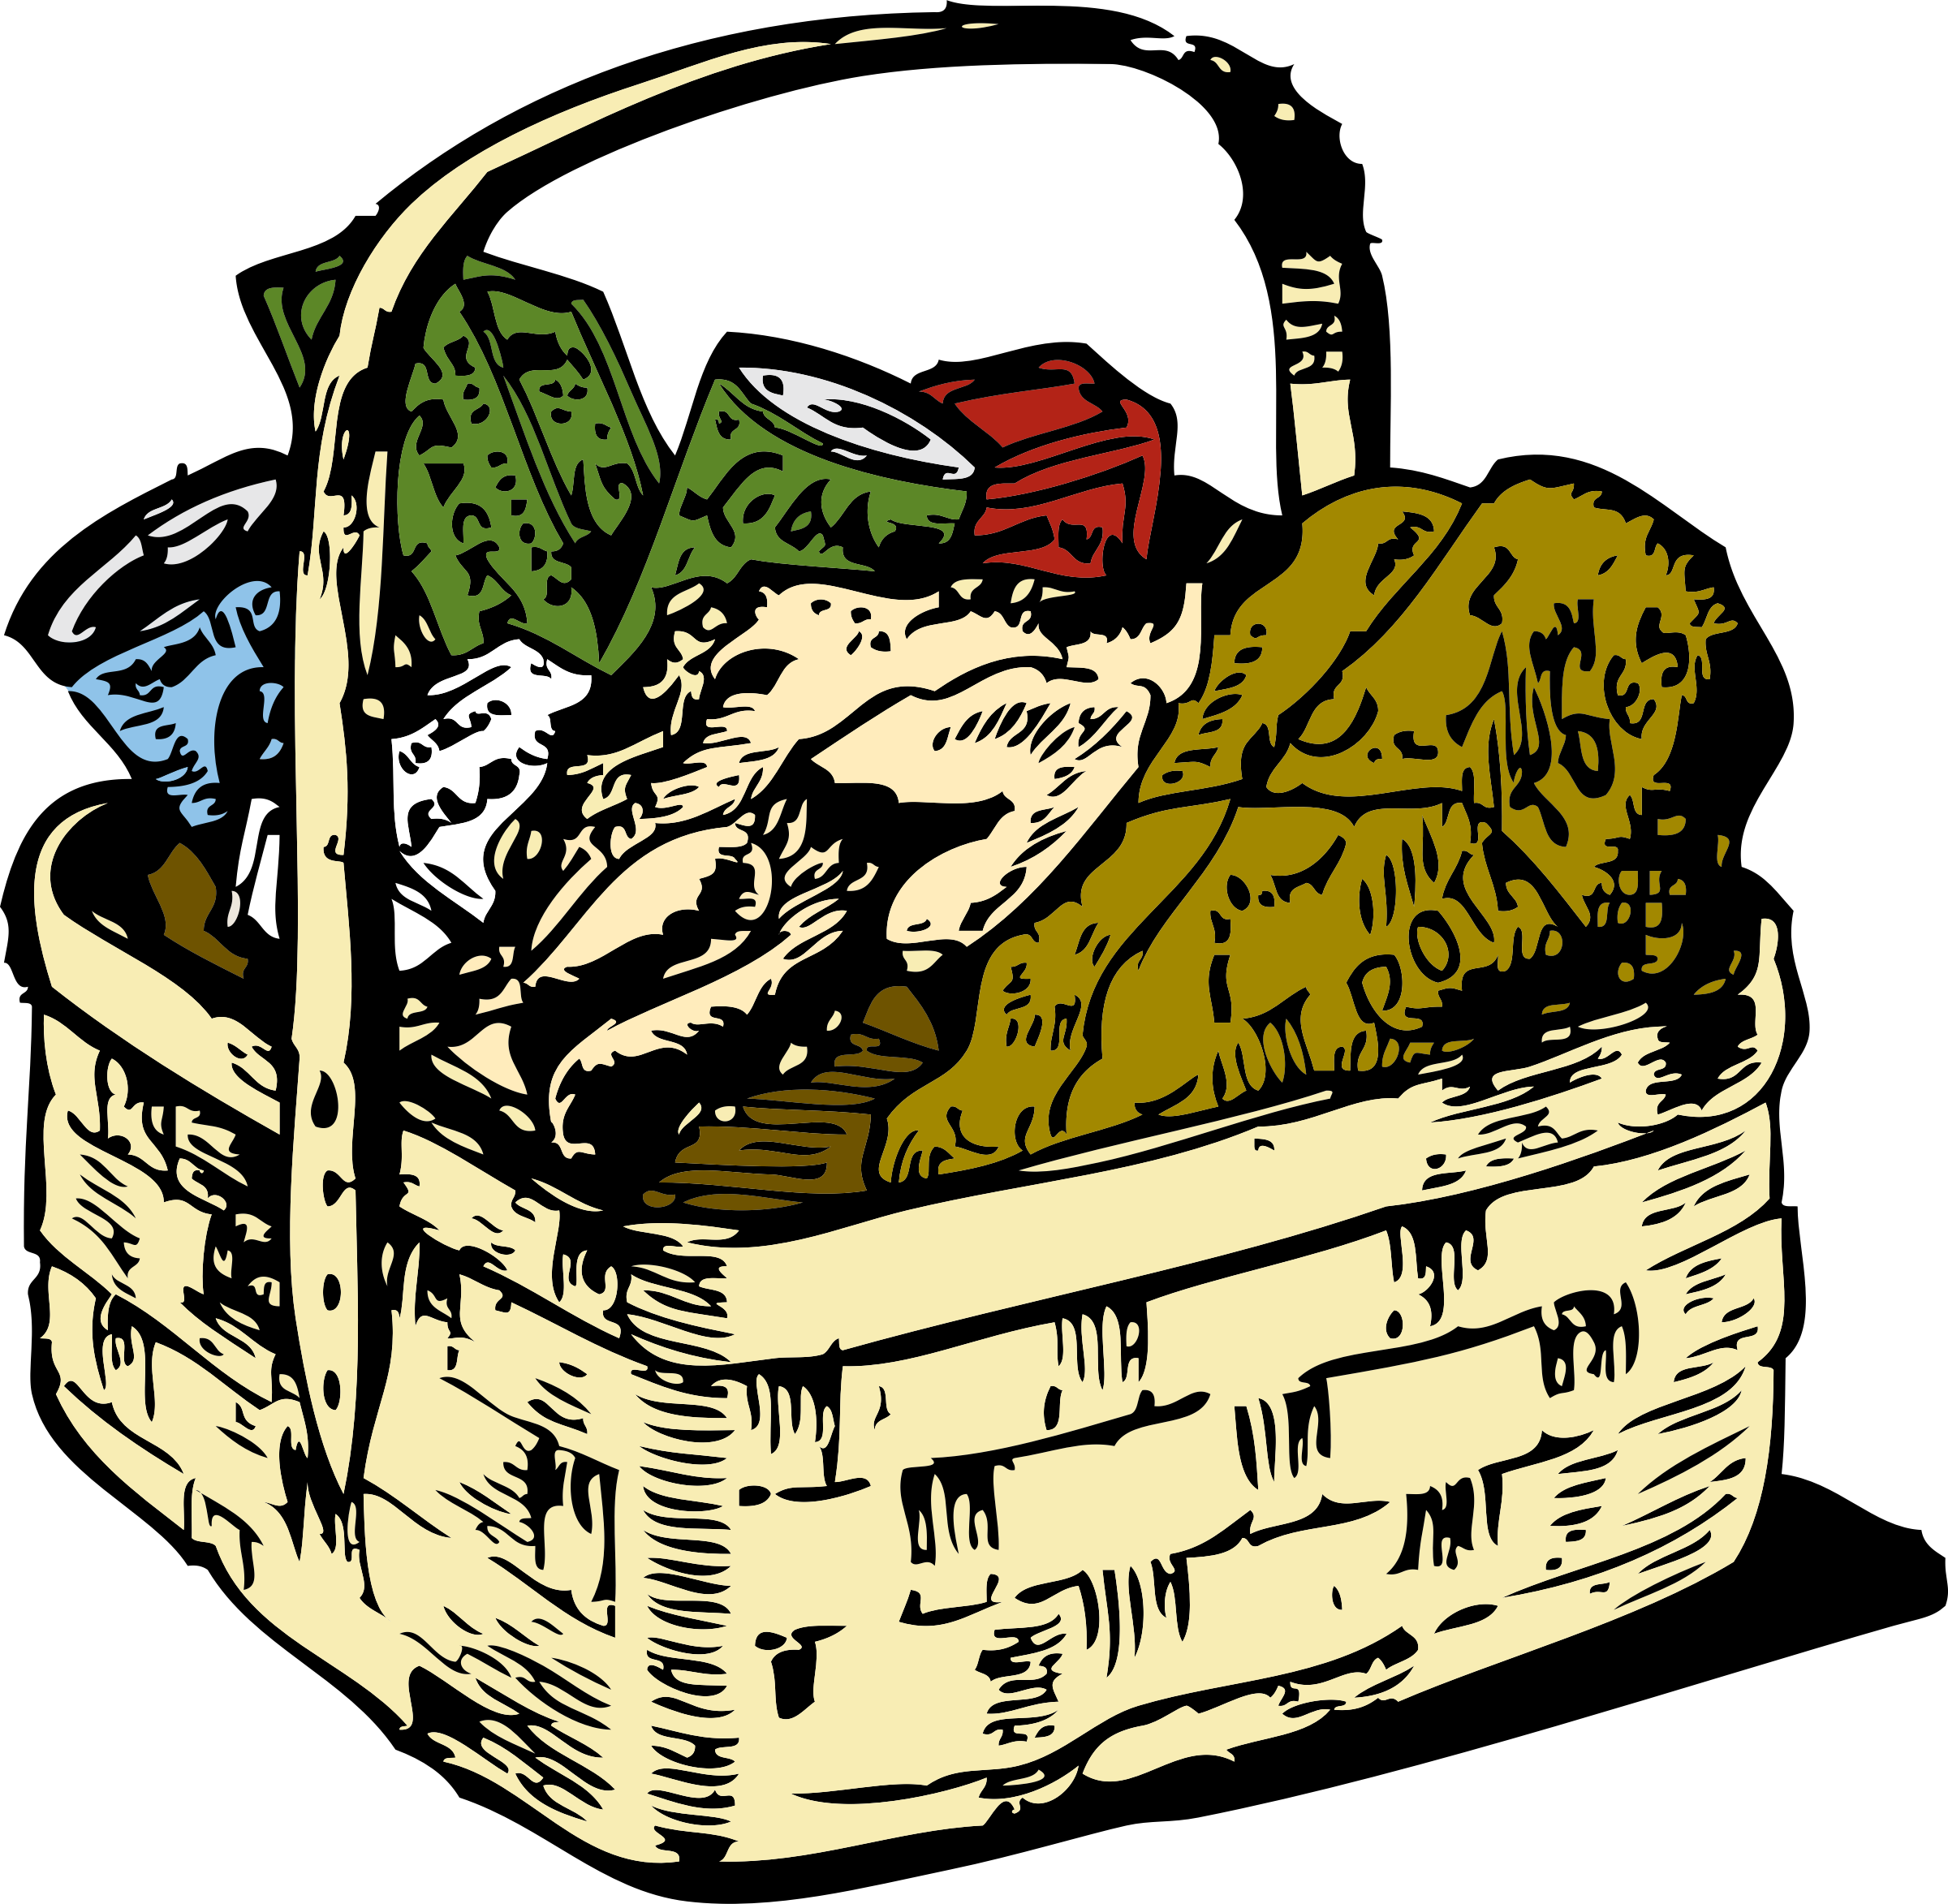 share clipart about Food Basket - Food Basket Clip Art, Find more high qual...